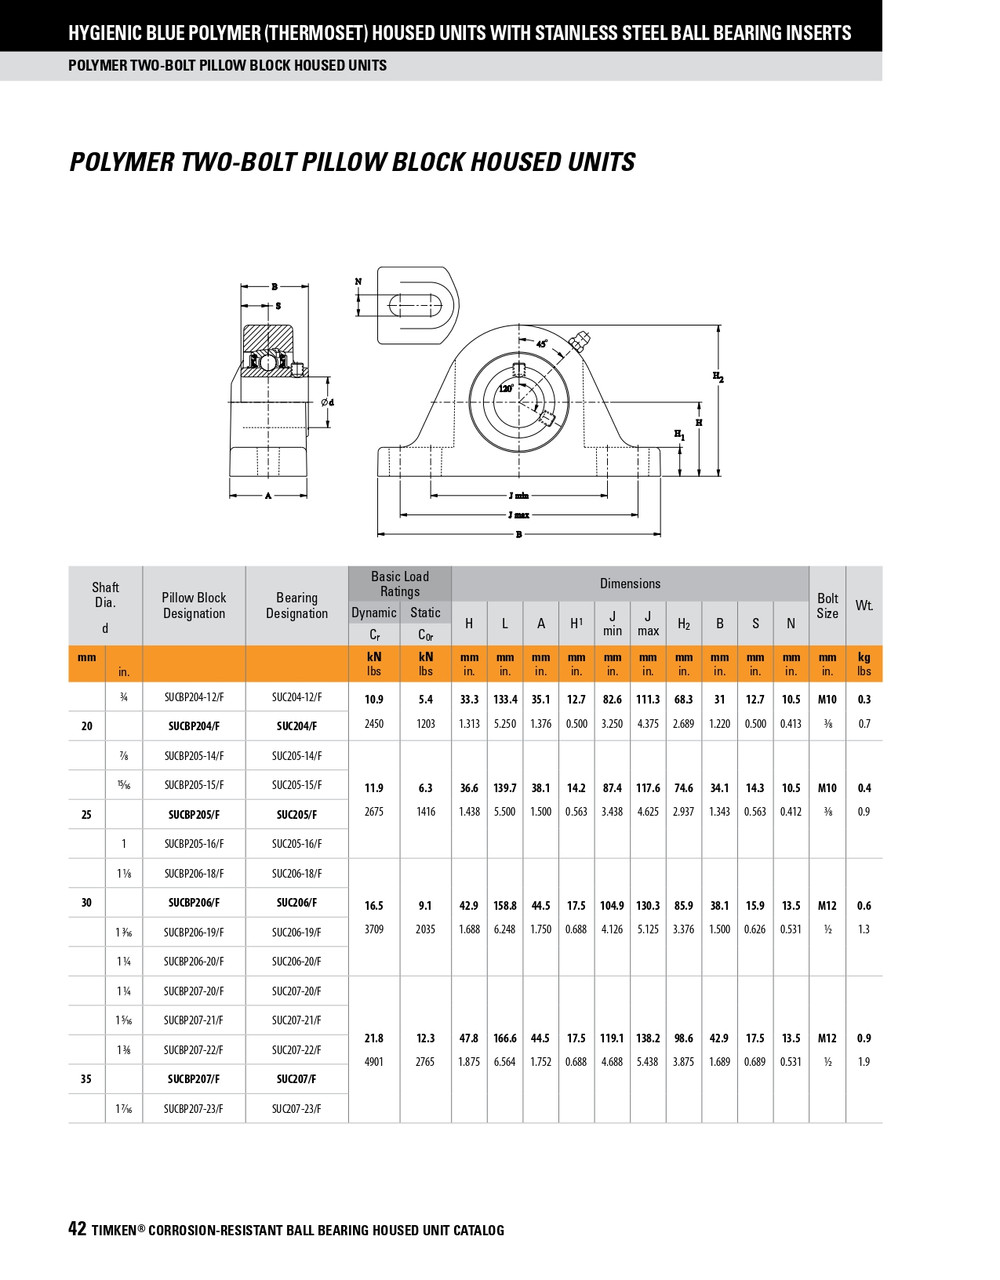 2" Hygienic Polymer Set Screw Pillow Block Assembly   SUCBP210-32/FVSL613